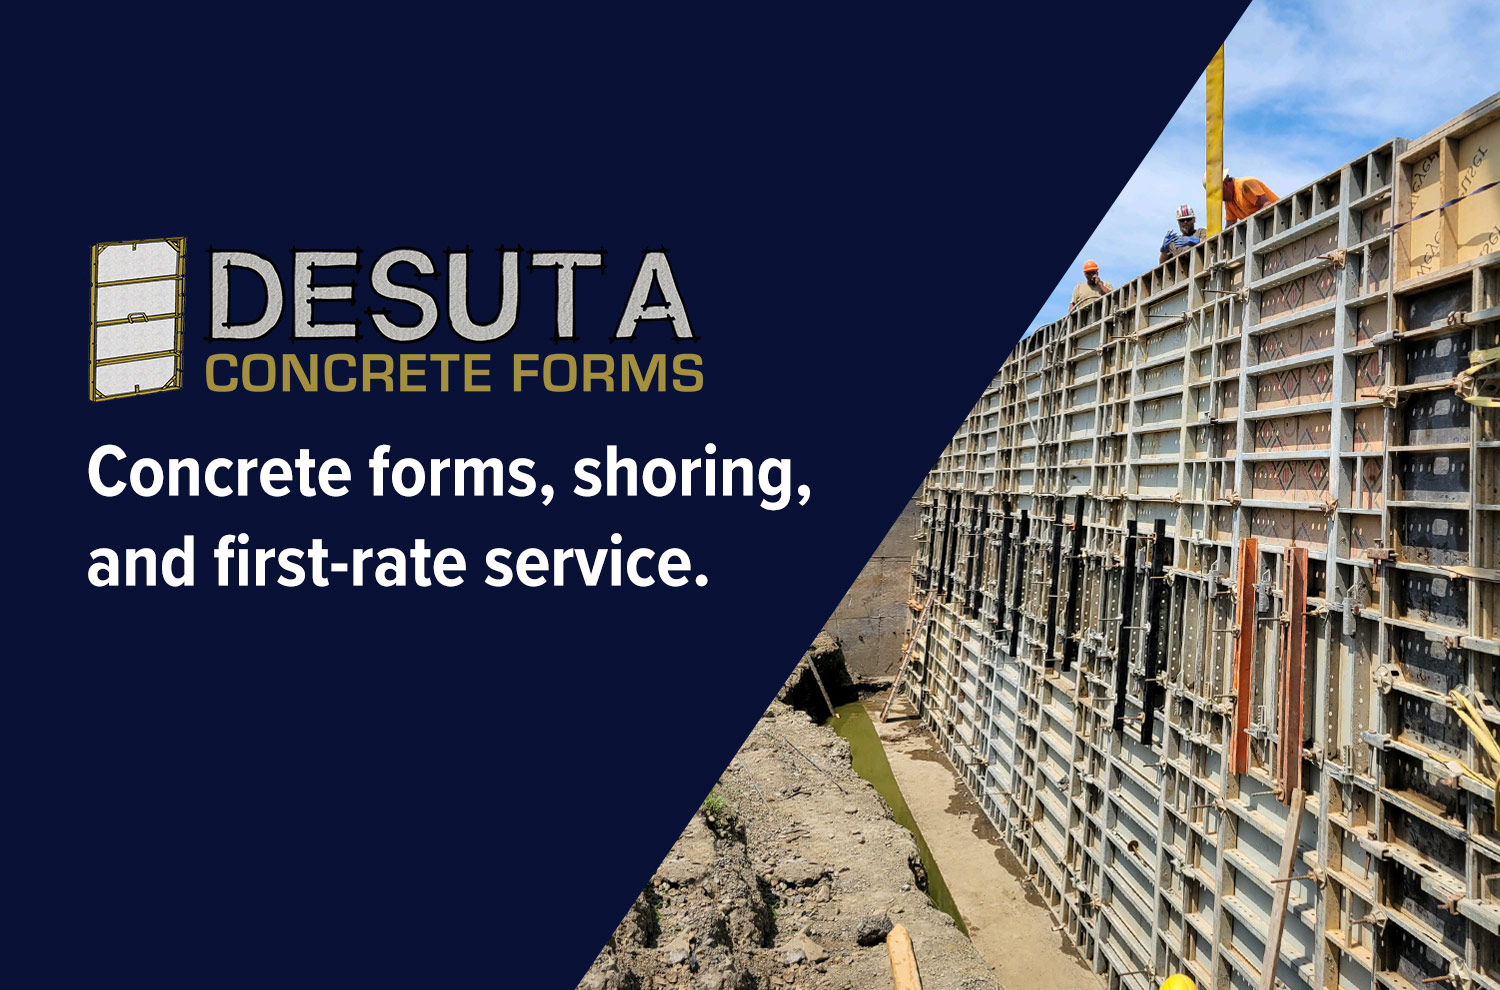 Image of Desuta Concrete Forms